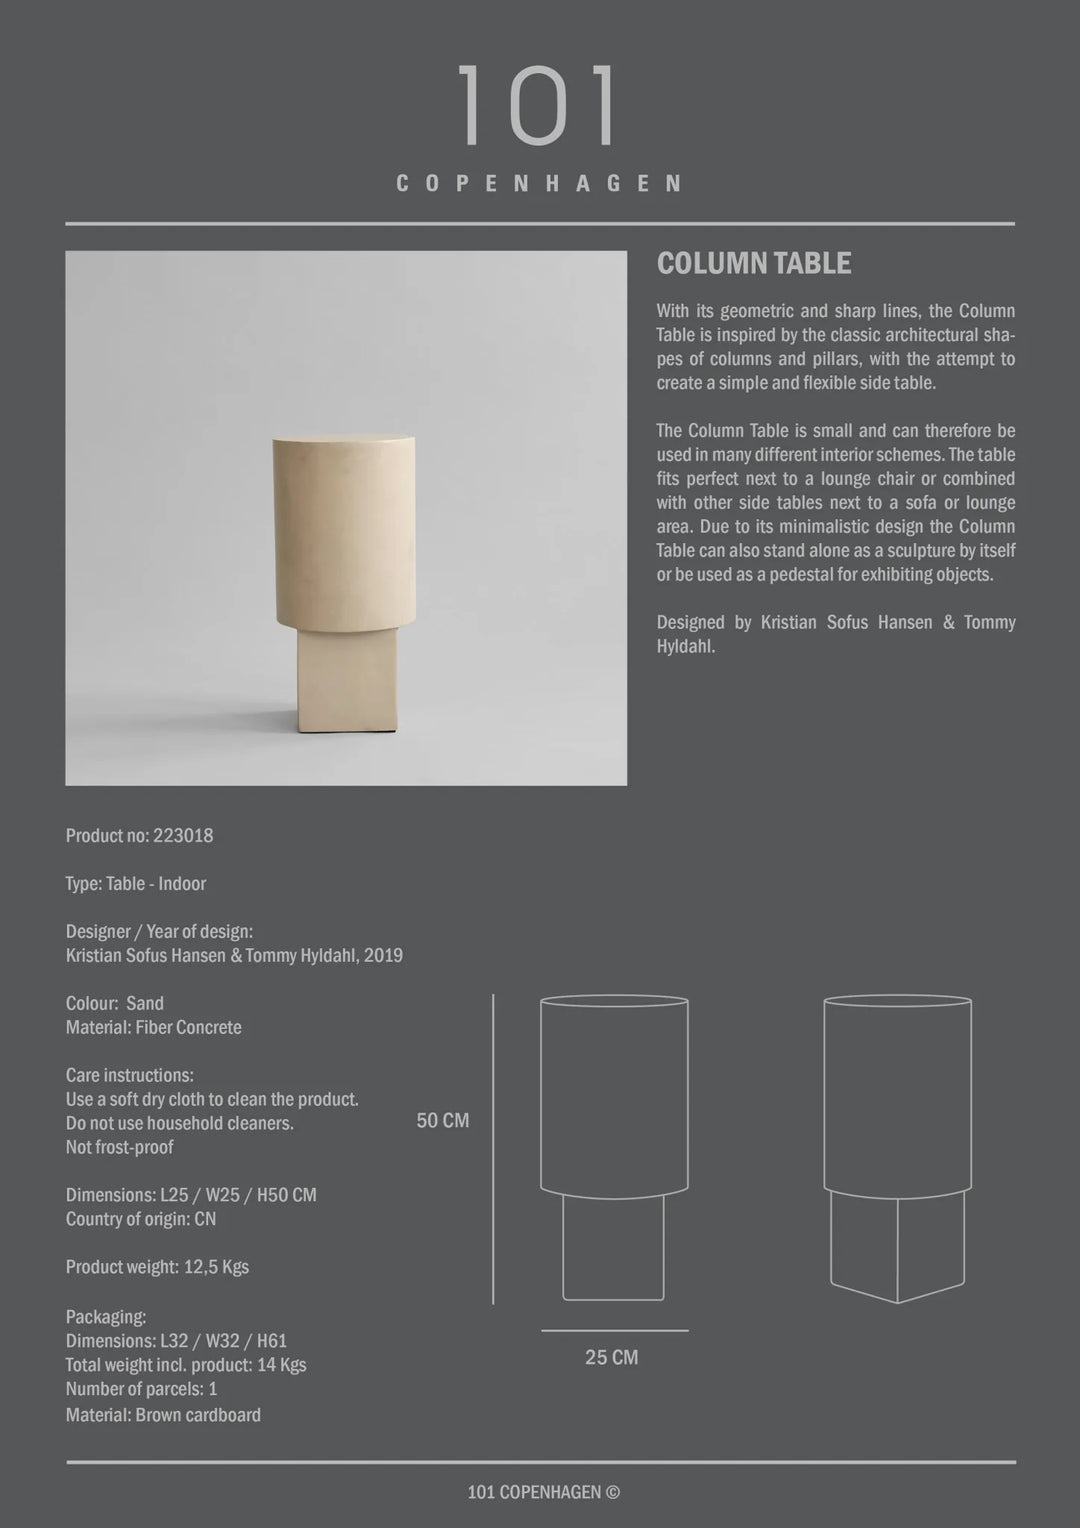 101 Copenhagen Column Table - $350.00